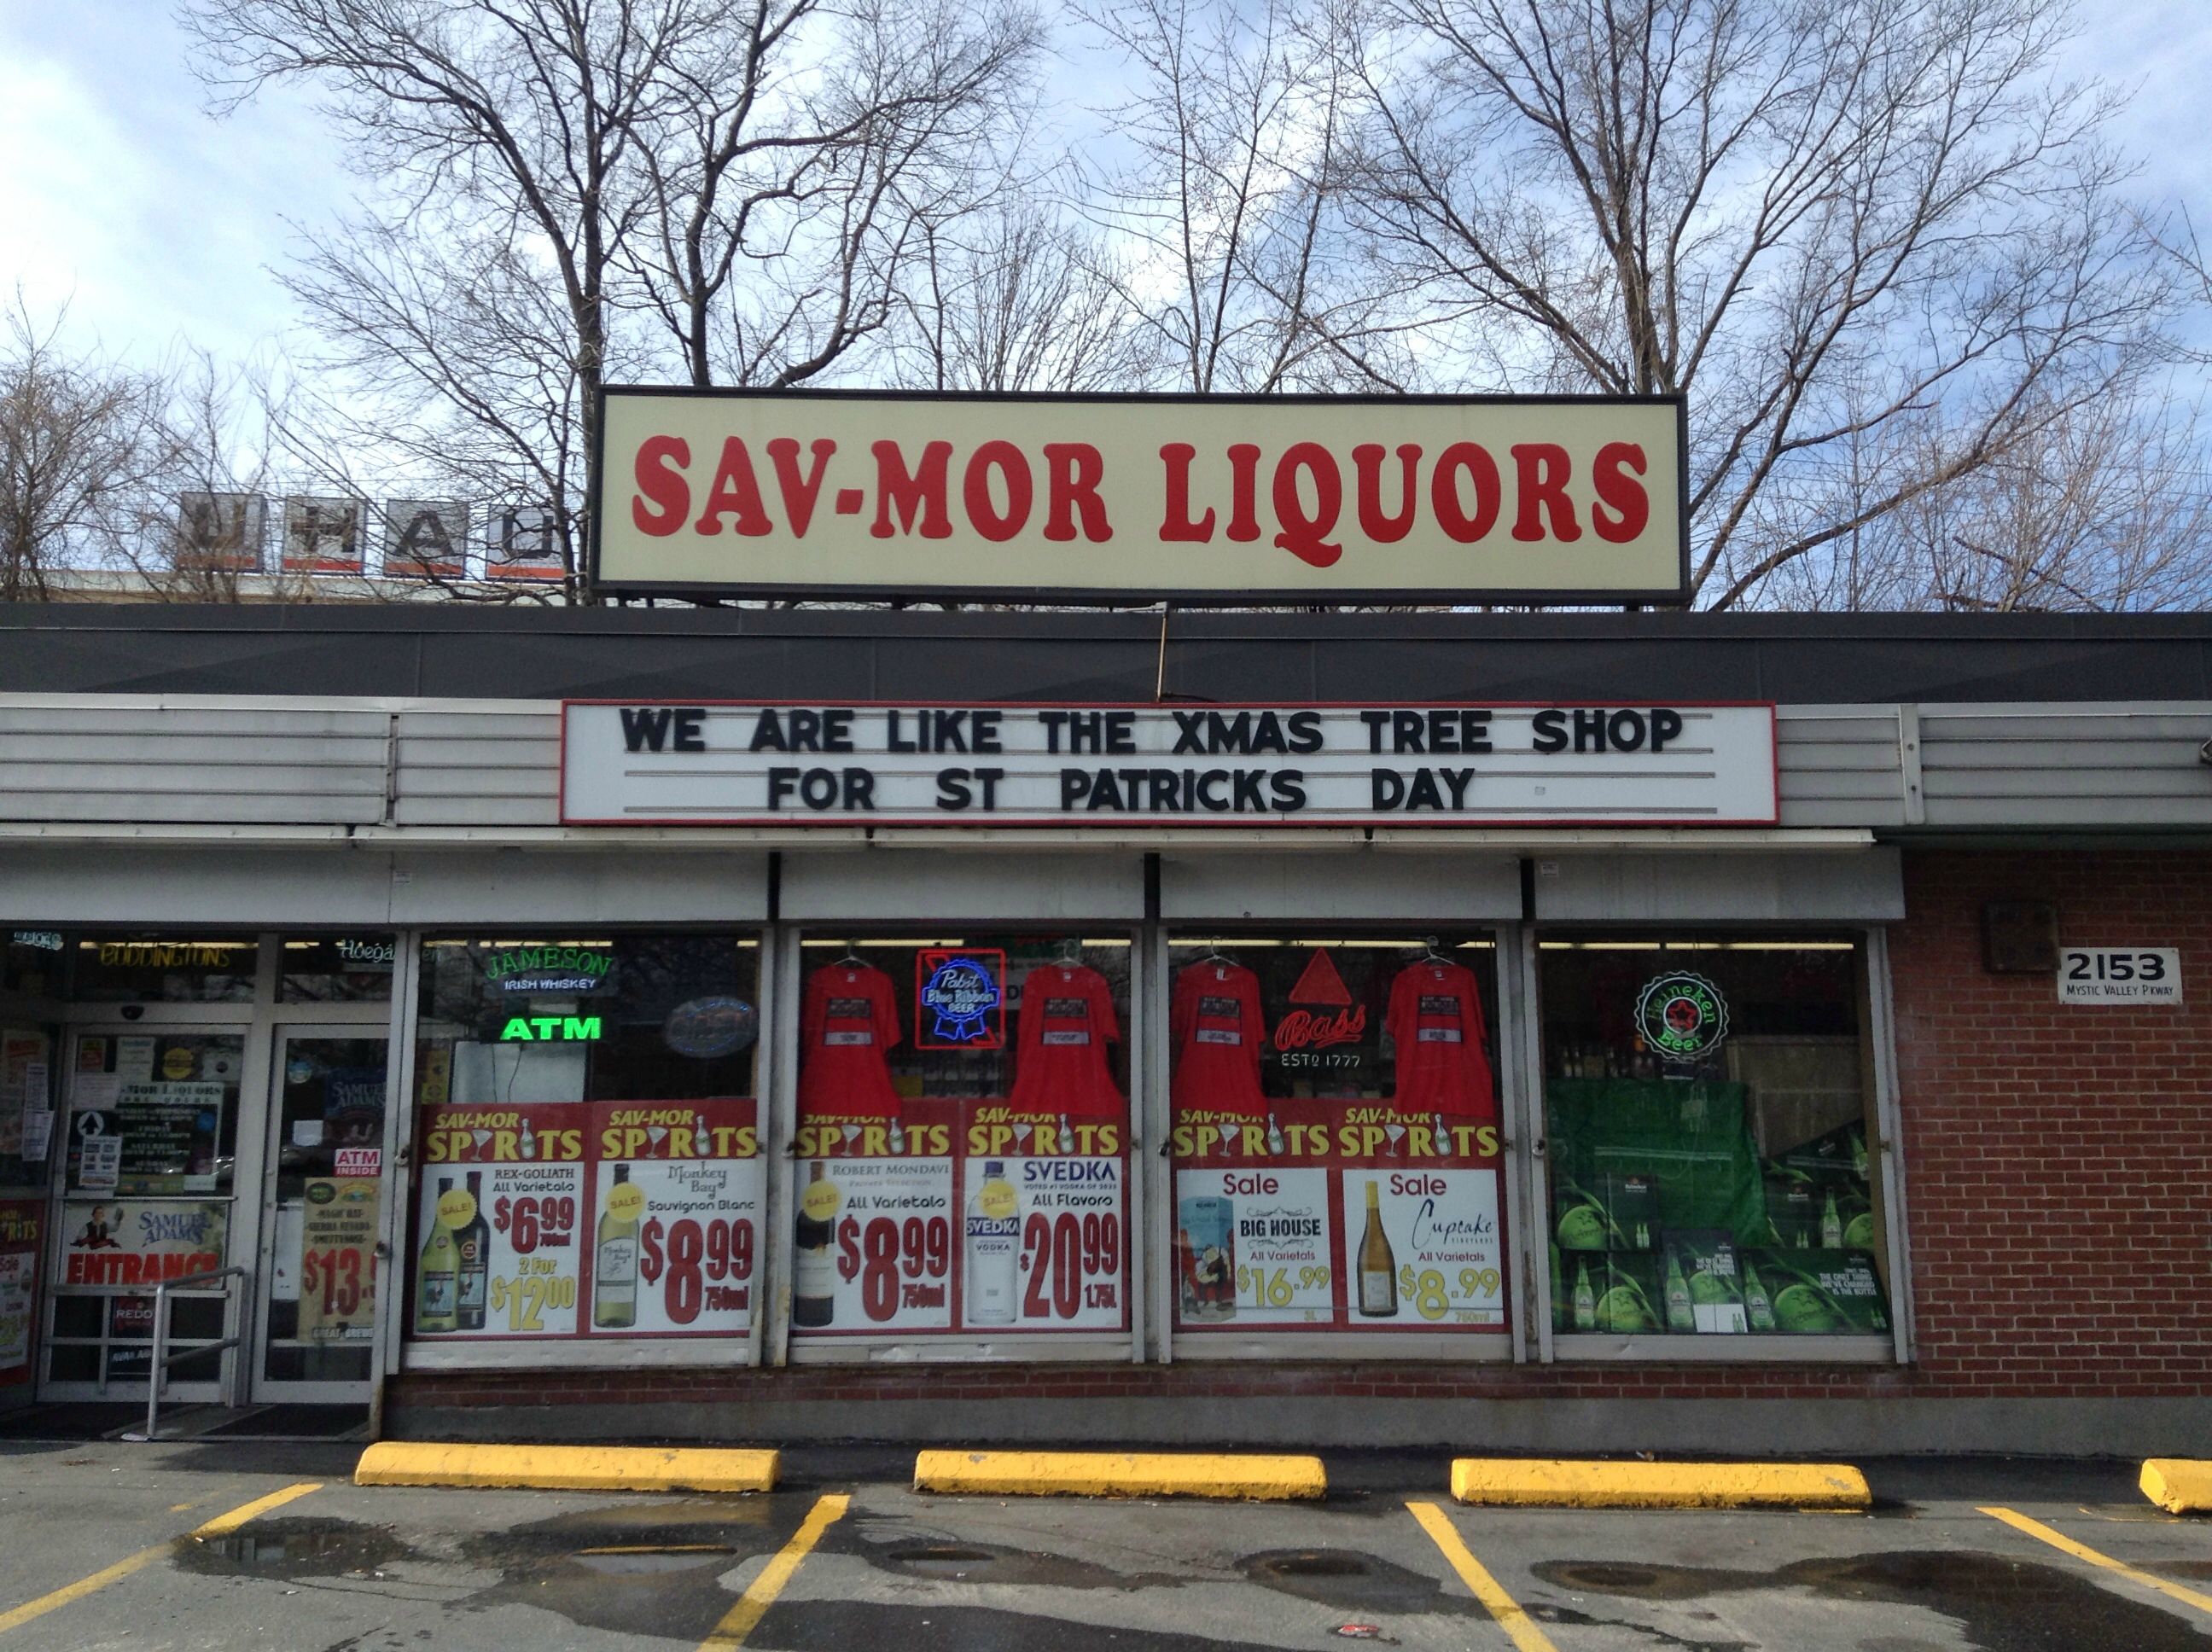 funny liquor store sign - SavMor Liquors We Are The Xmas Tree Shop For St Patricks Day 2153 Atm Spyrots Sports Spyru Spzrits Spirits Sprits She